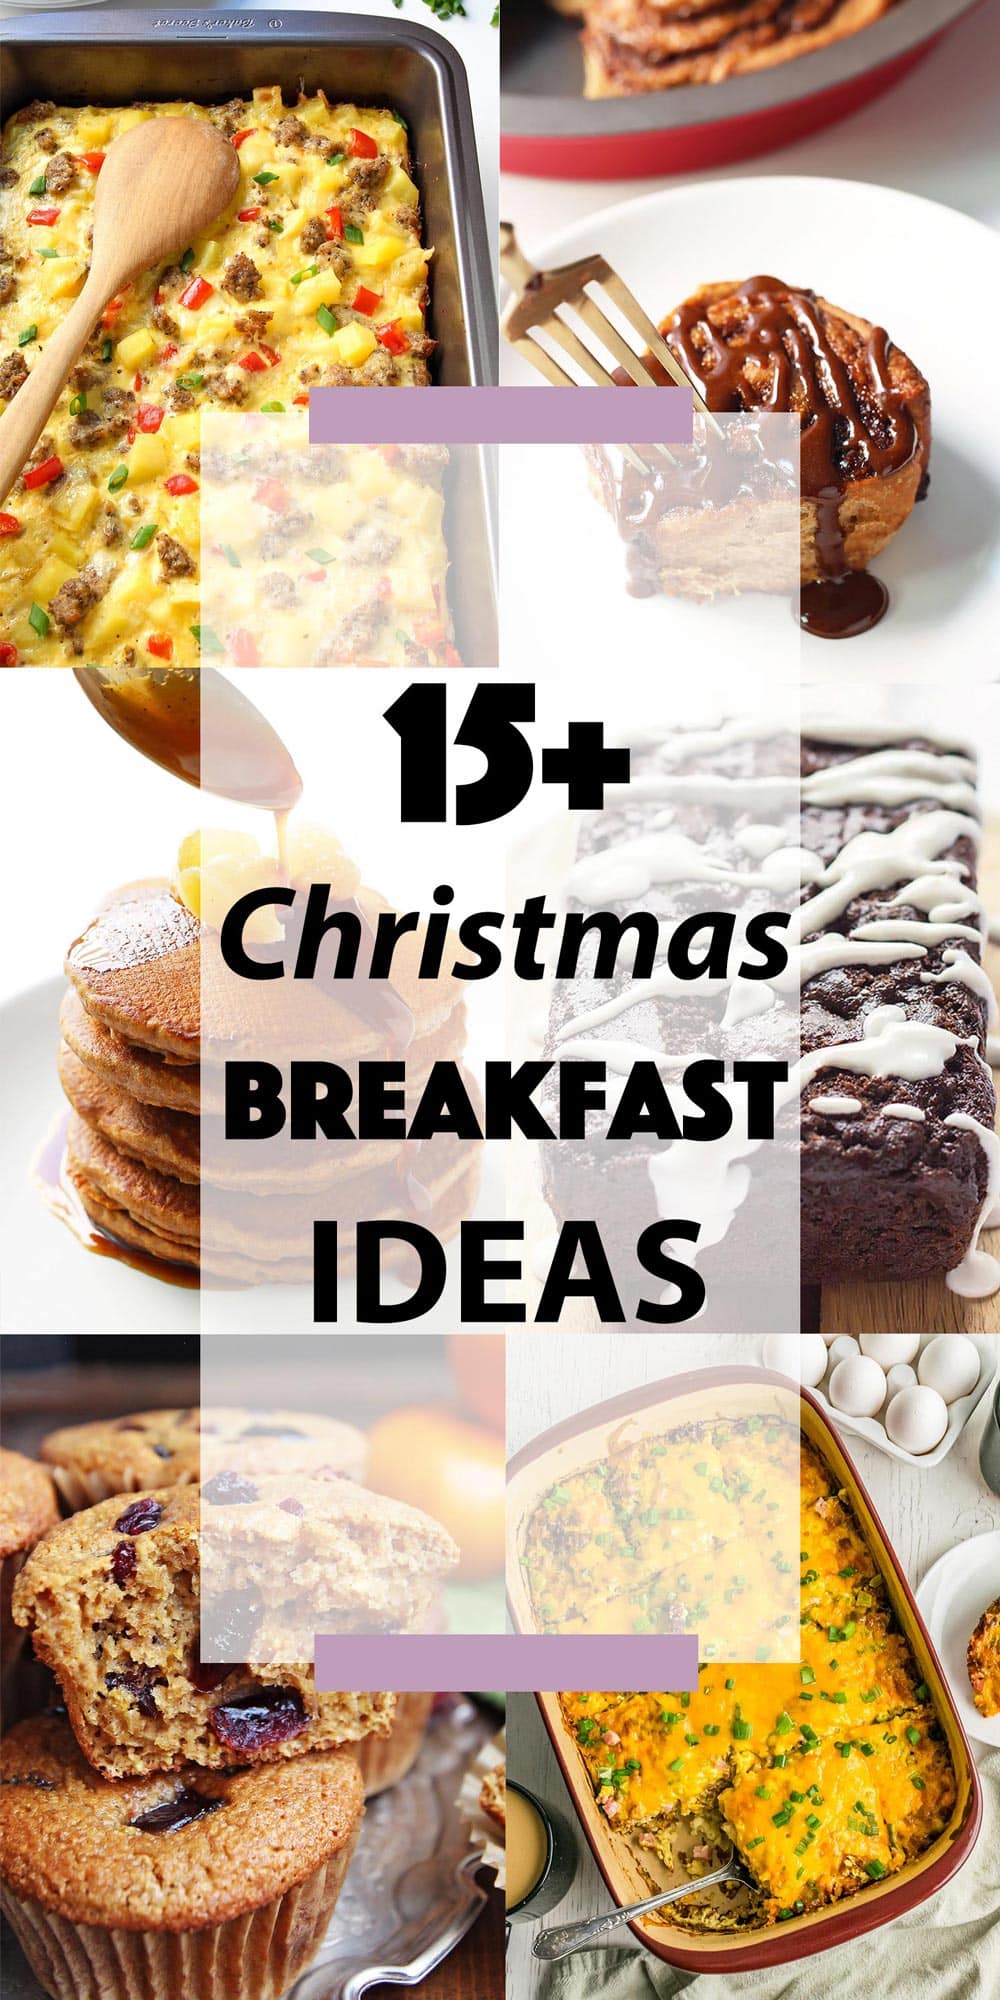 Christmas Breakfast Ideas Image Collage